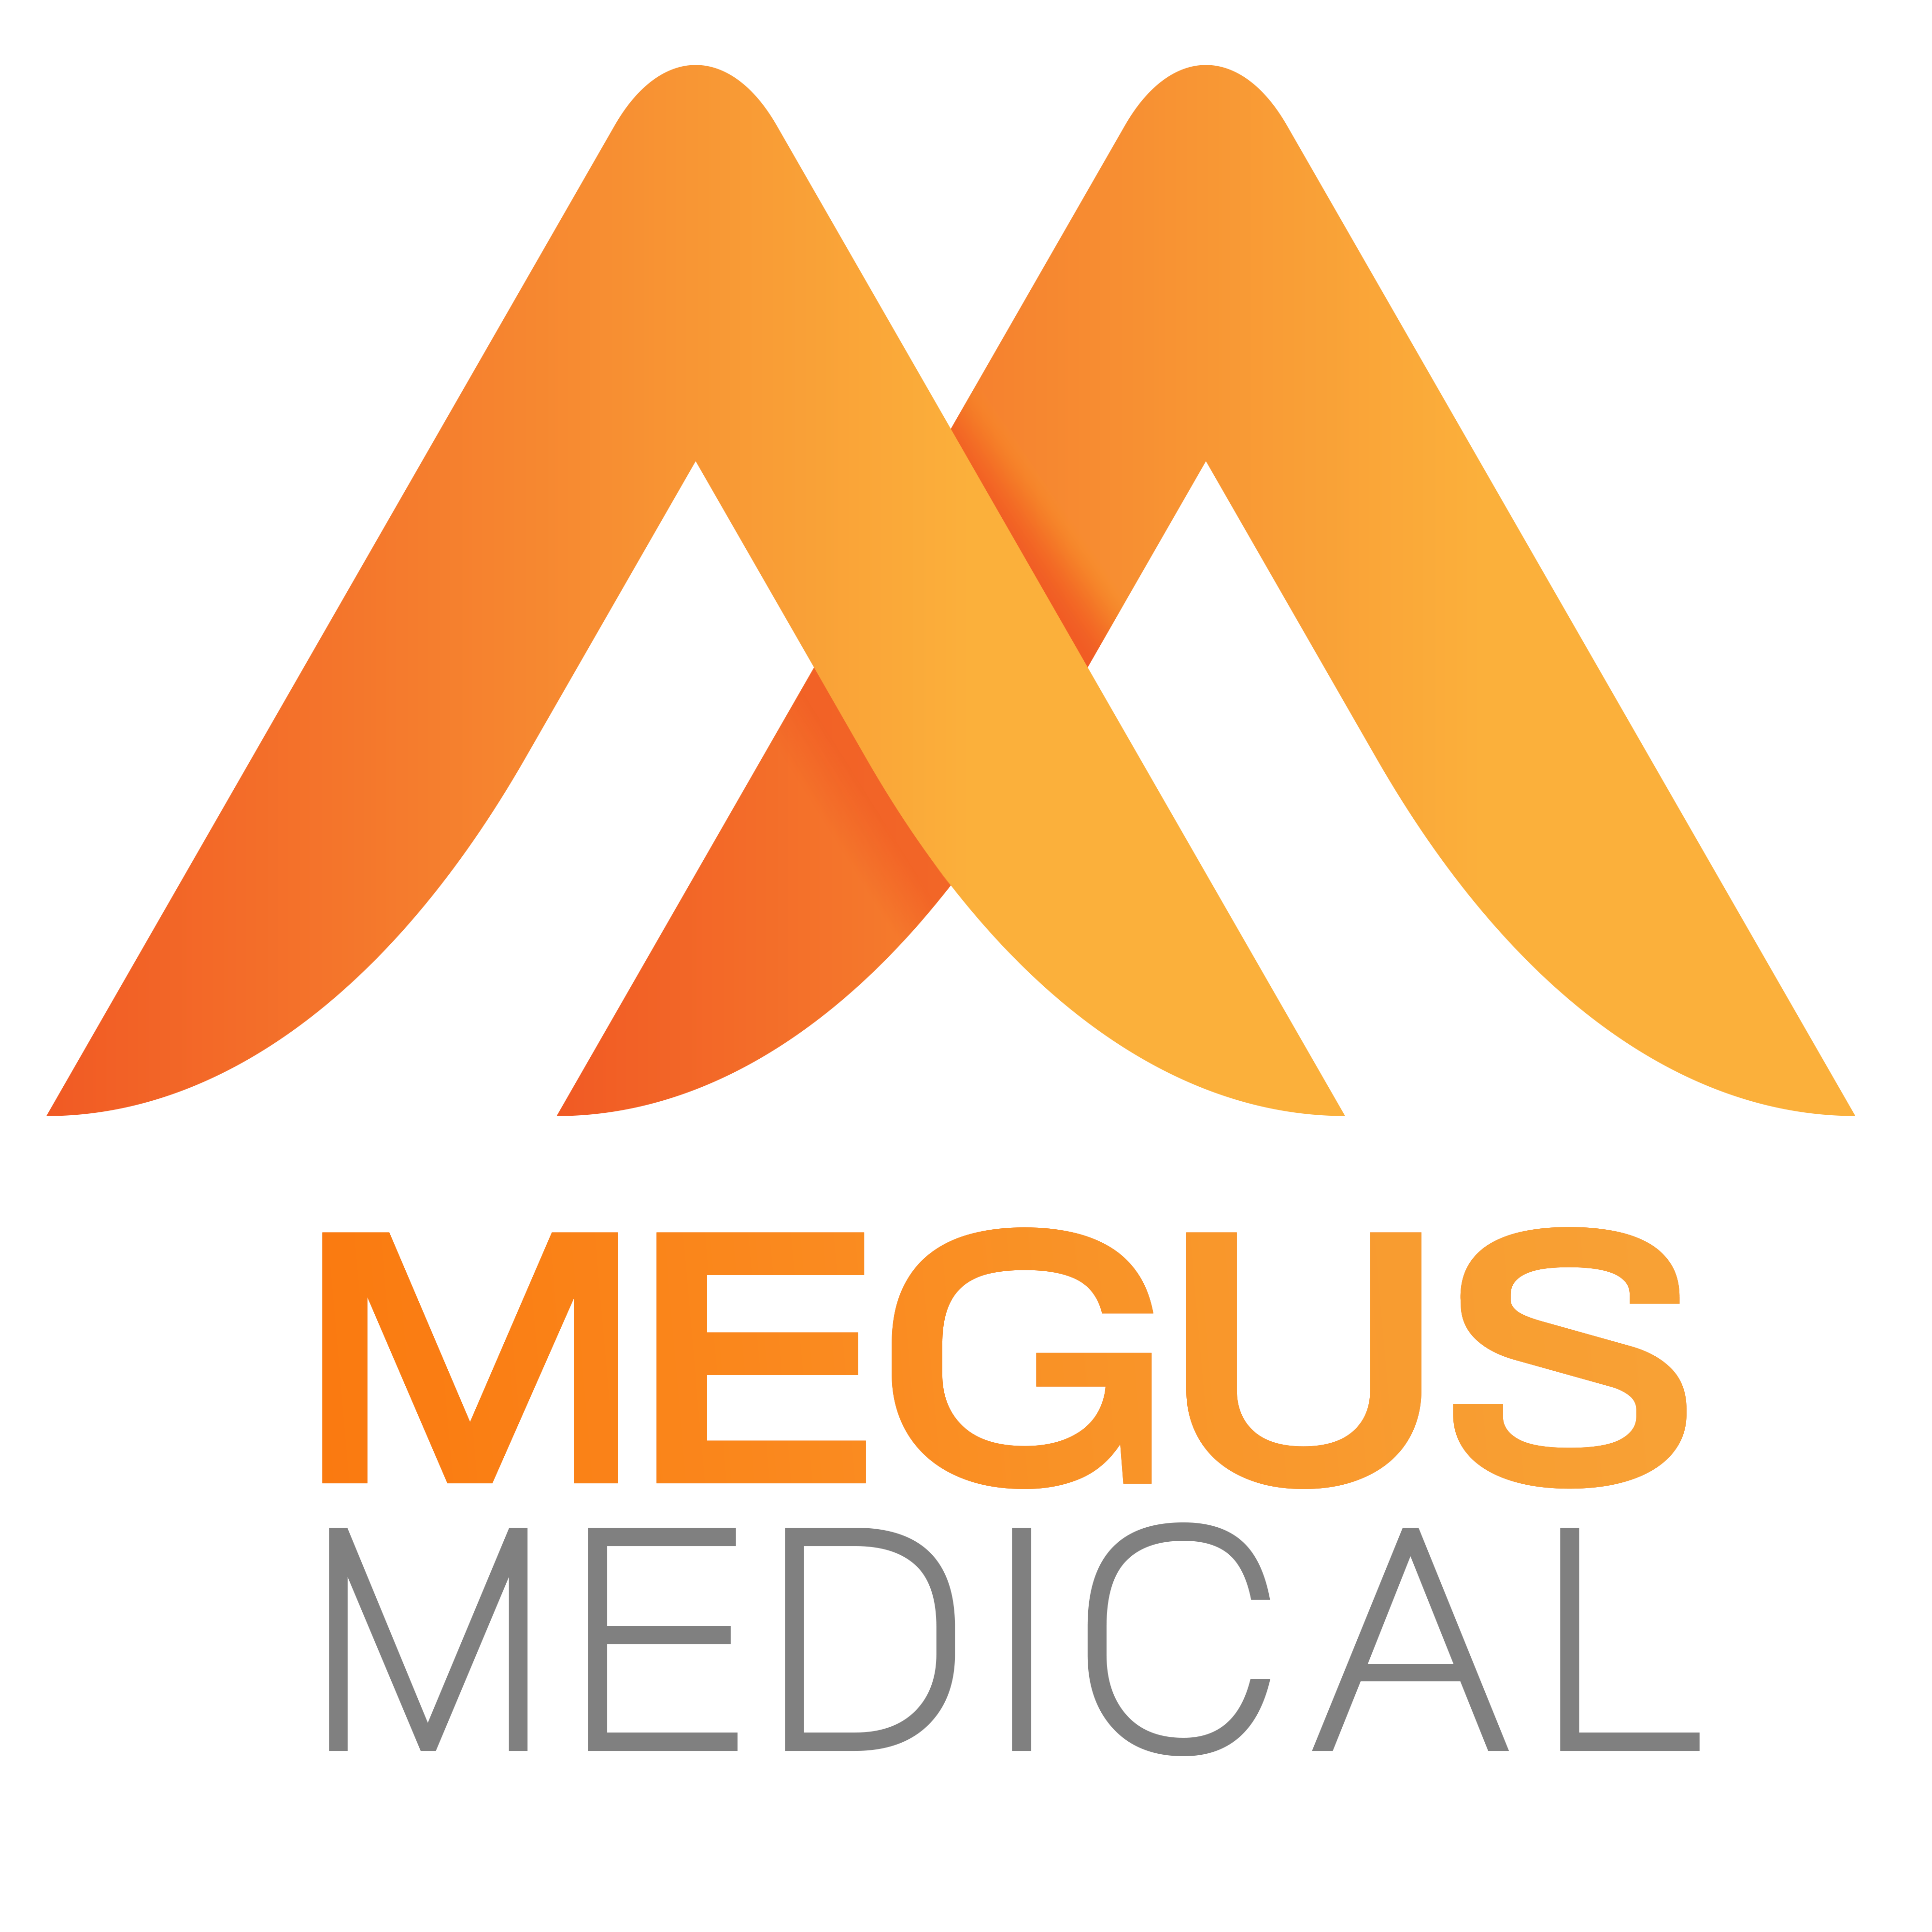 Megus Medical